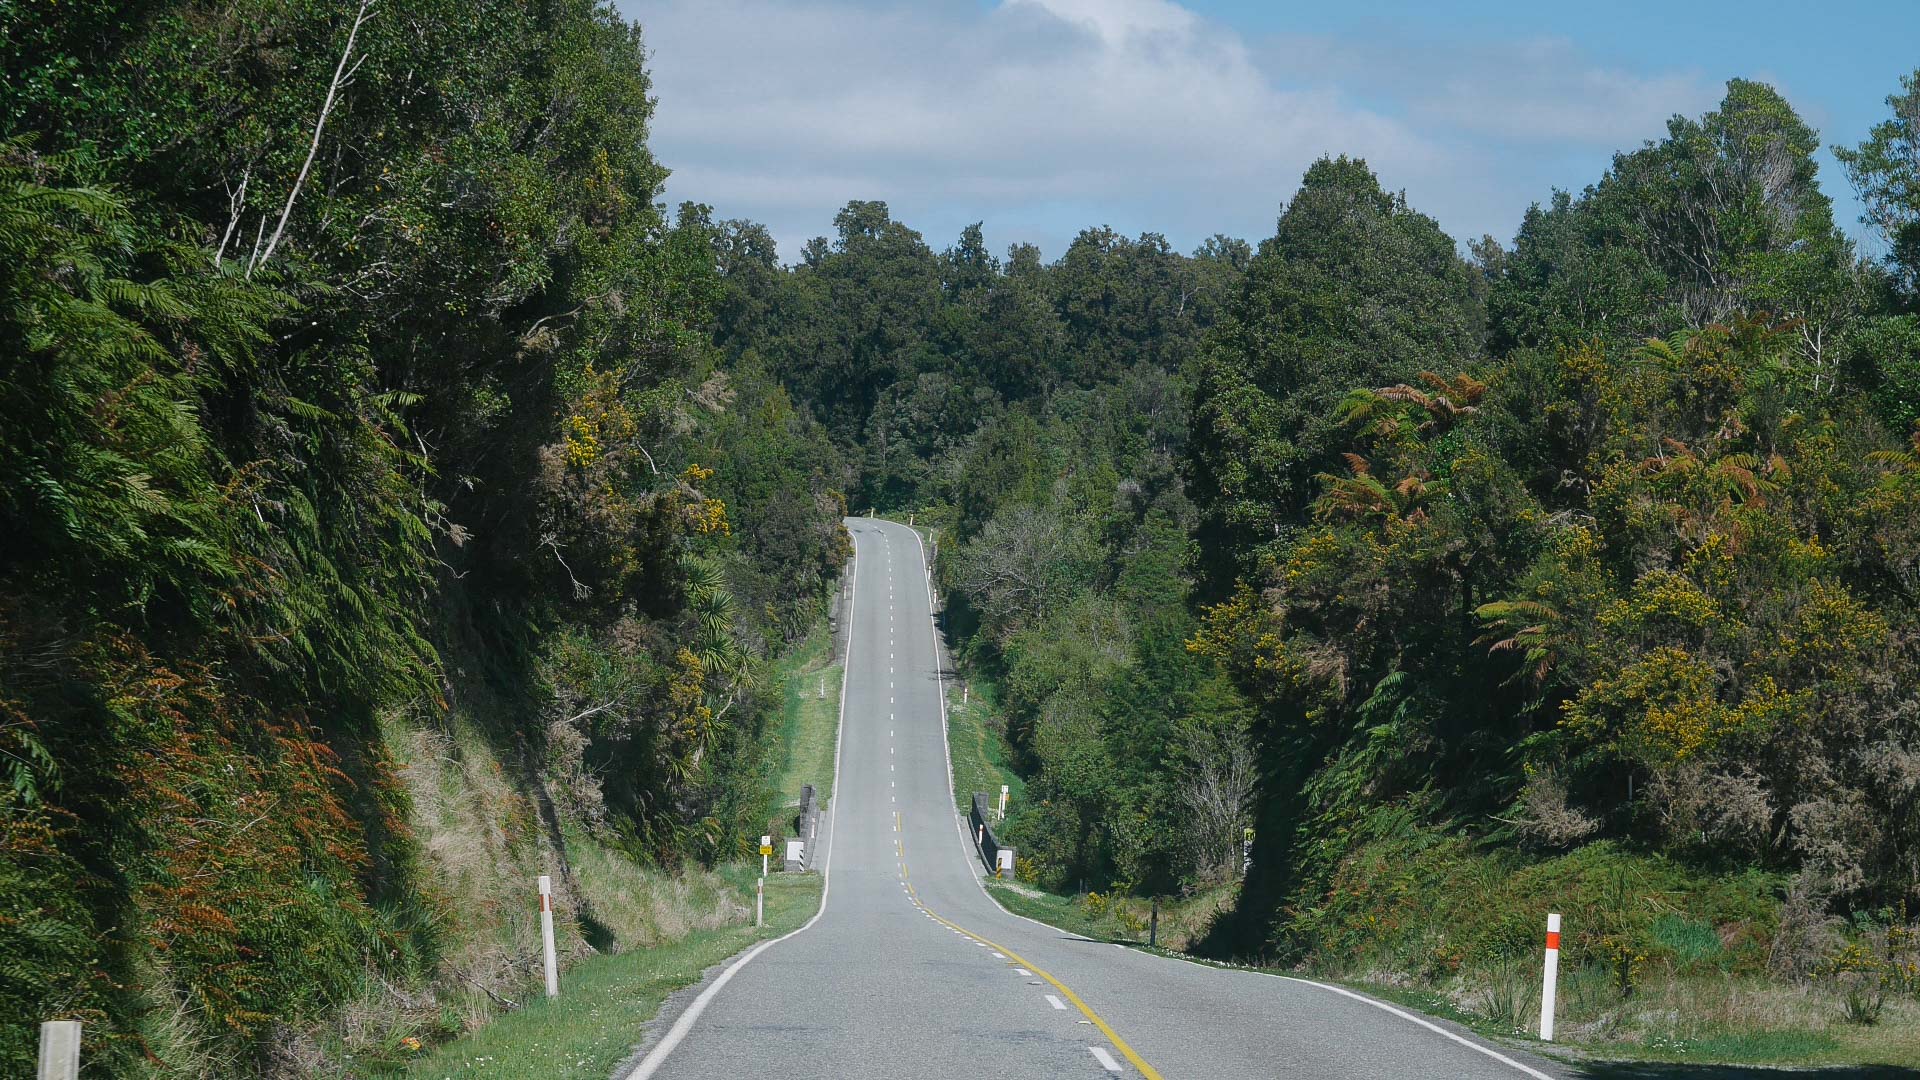 Take a look around HEAVEN, South Island New Zealand